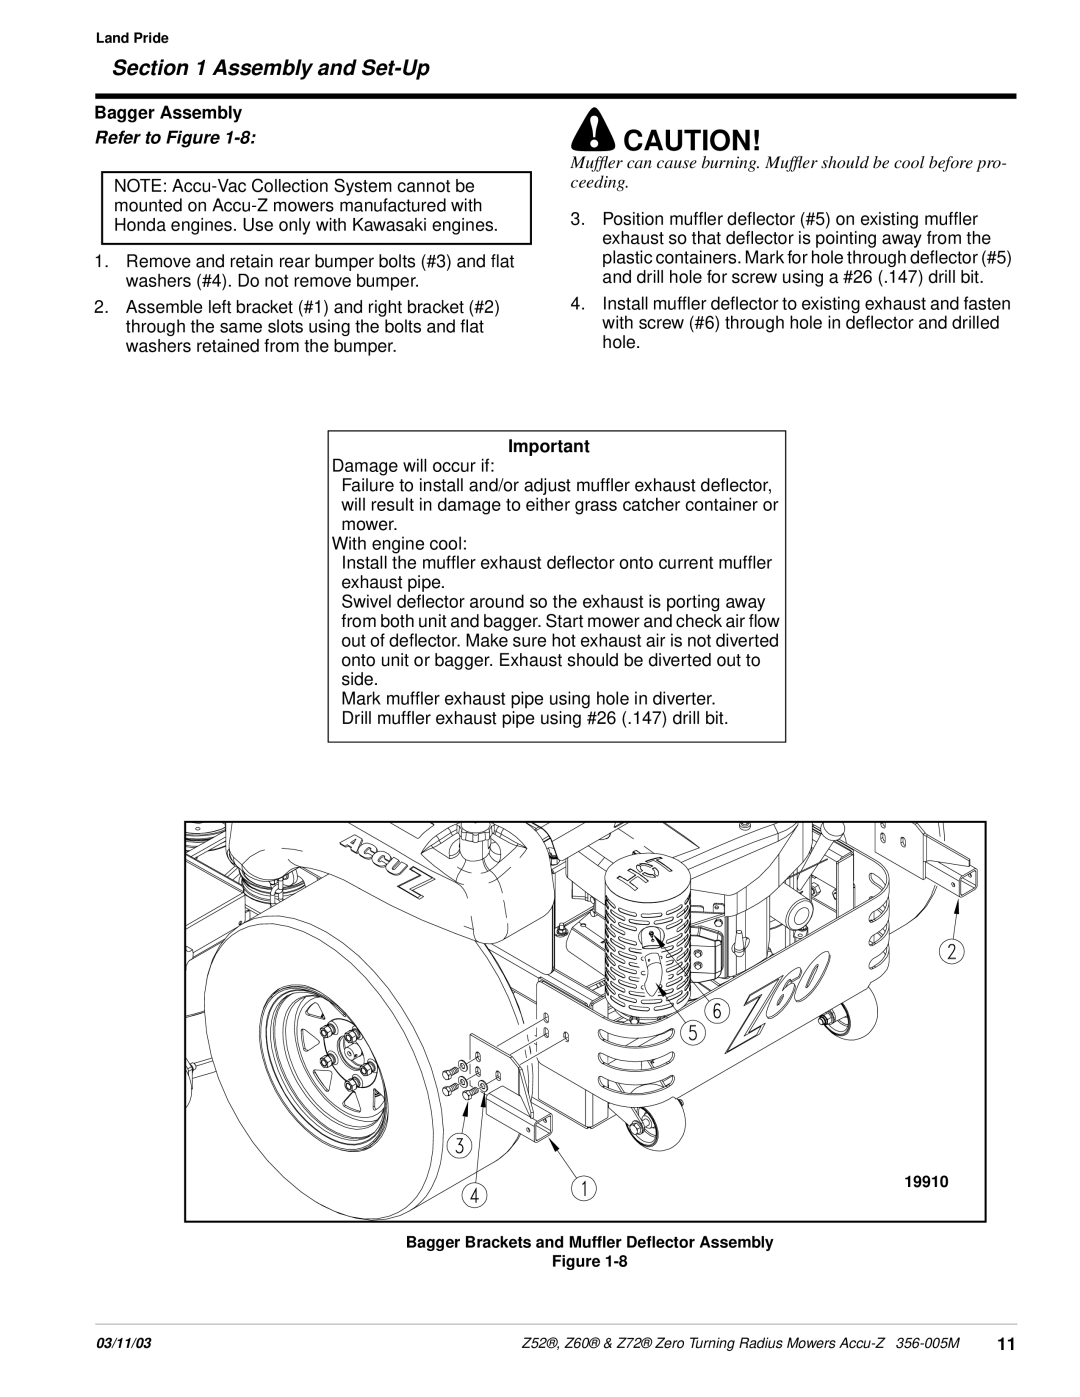 Land Pride Z52 , Z60, Z72 manual Assembly and Set-Up, Bagger Assembly, Refer to Figure 